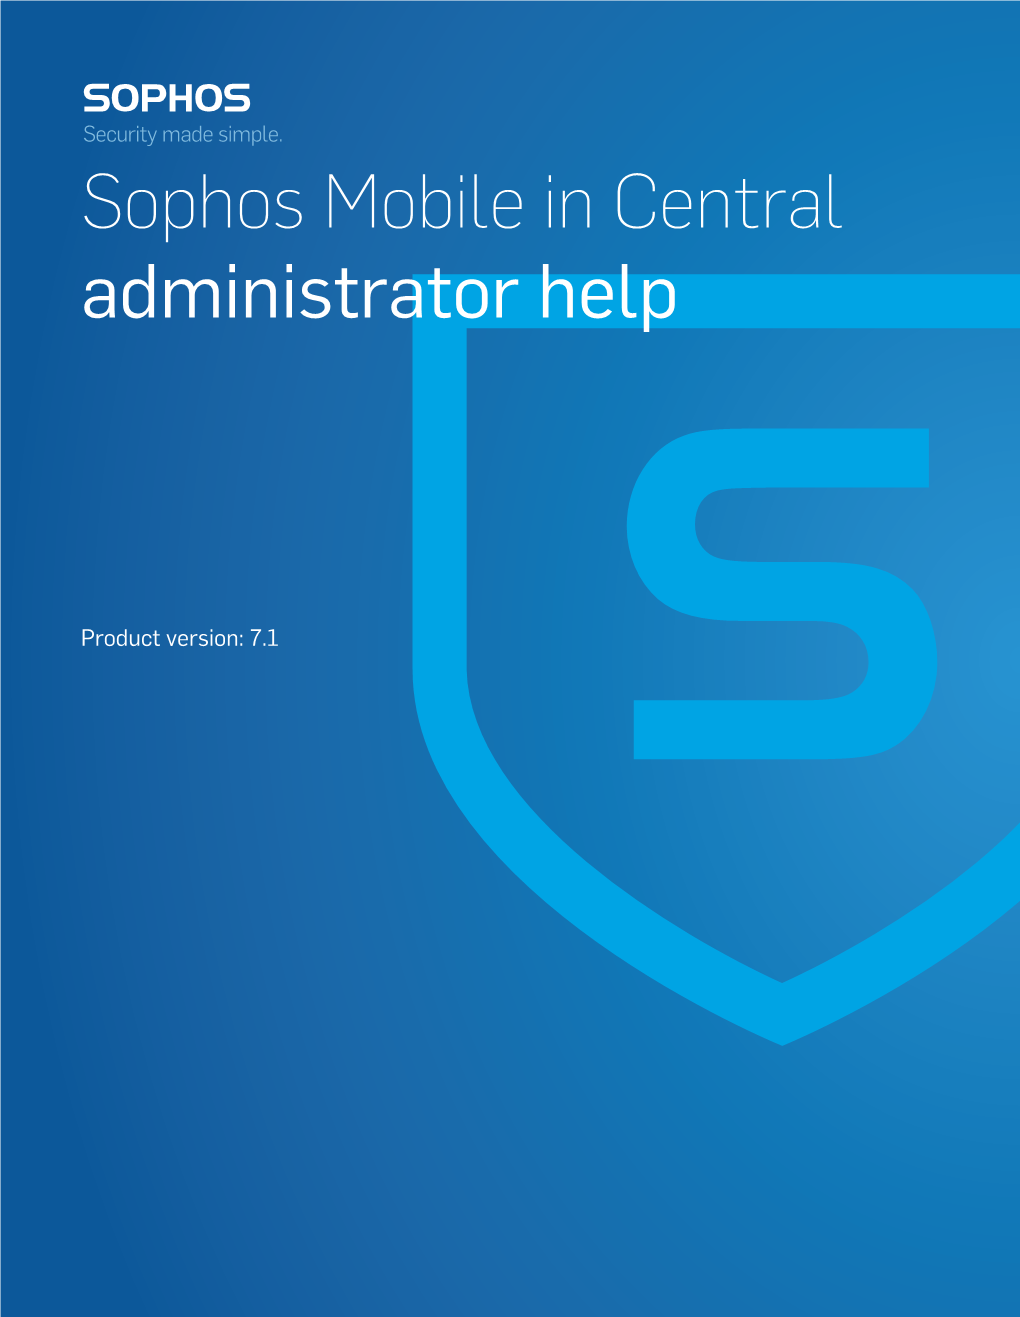 Sophos Mobile in Central Administrator Help